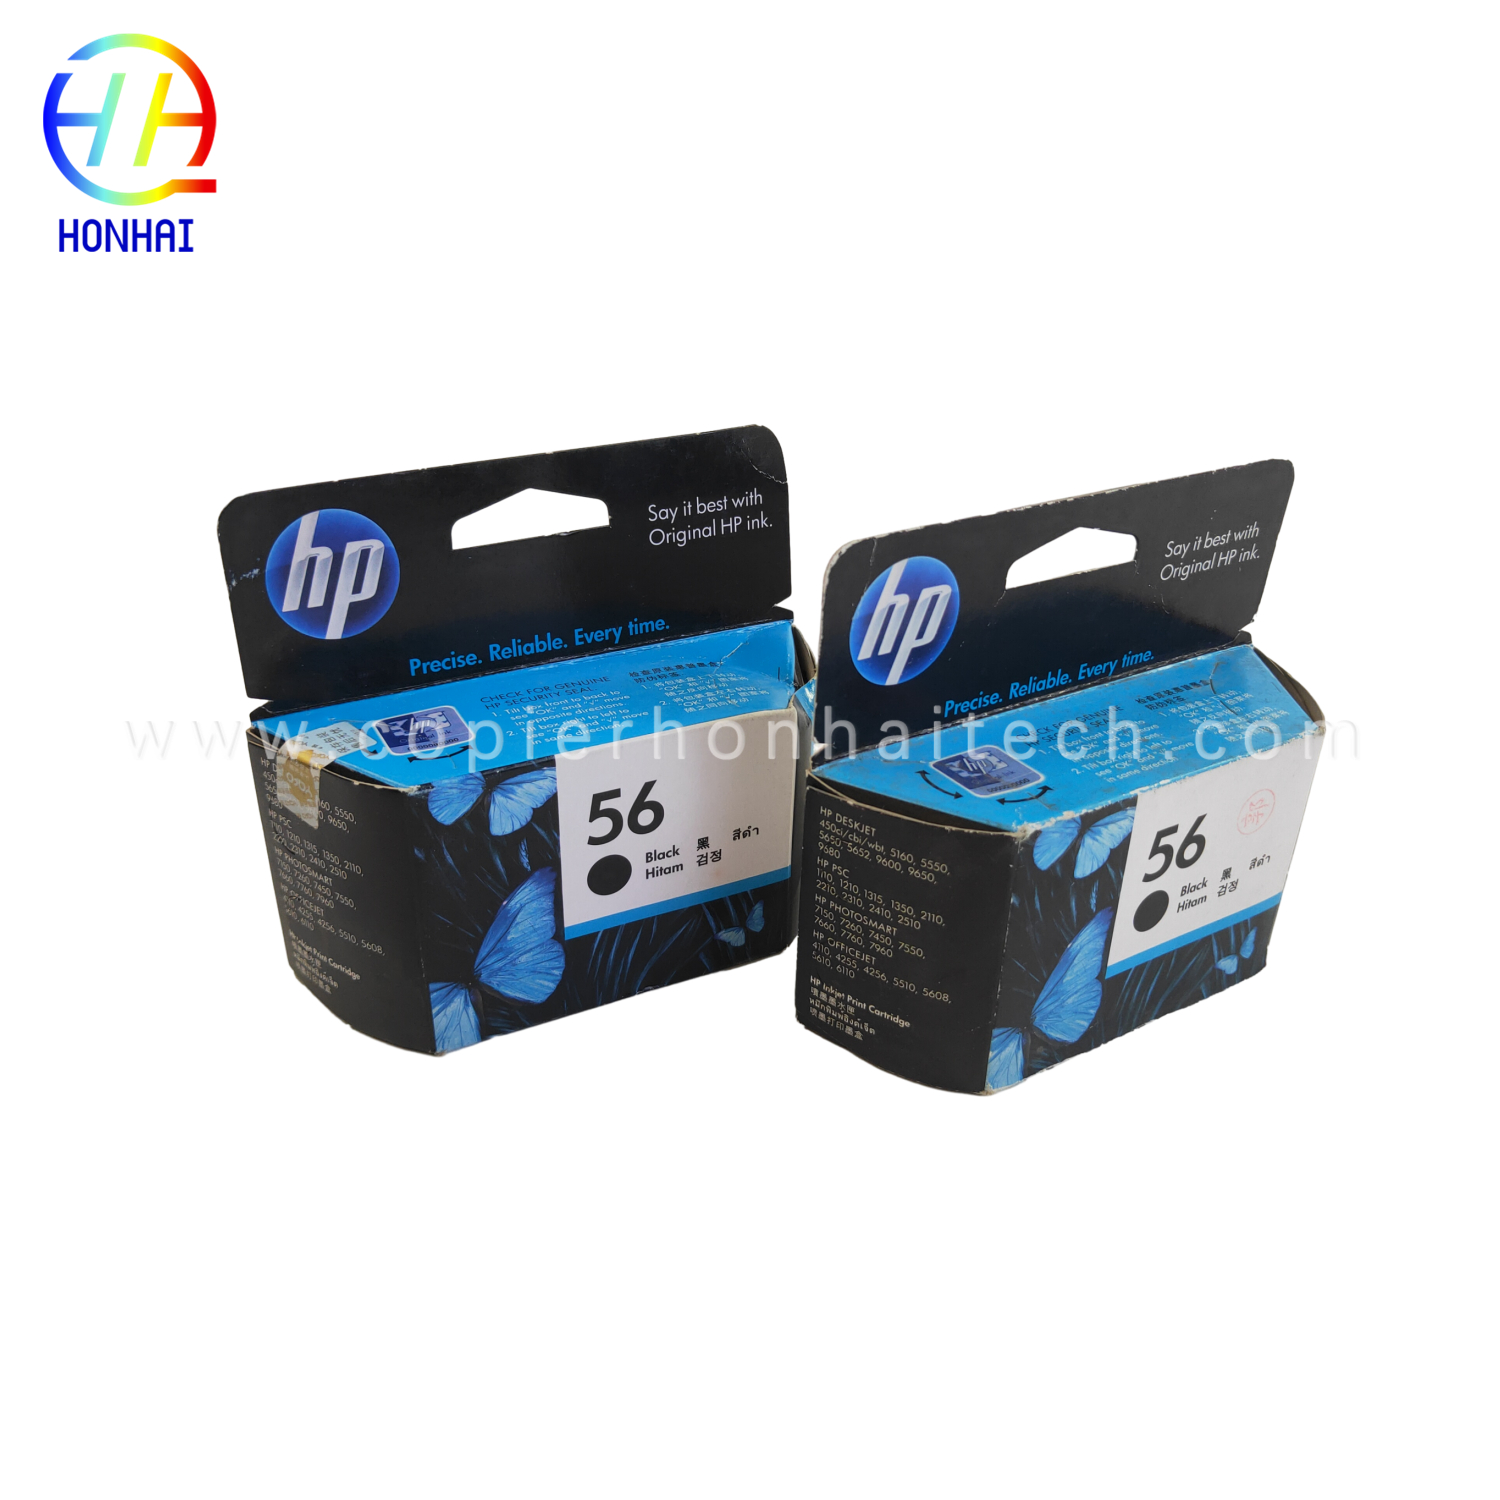 https://www.copierhonhaitech.com/origen-black-printer-ink-cartridge-56-for-hp-deskjet-5550-5551-5552-product/